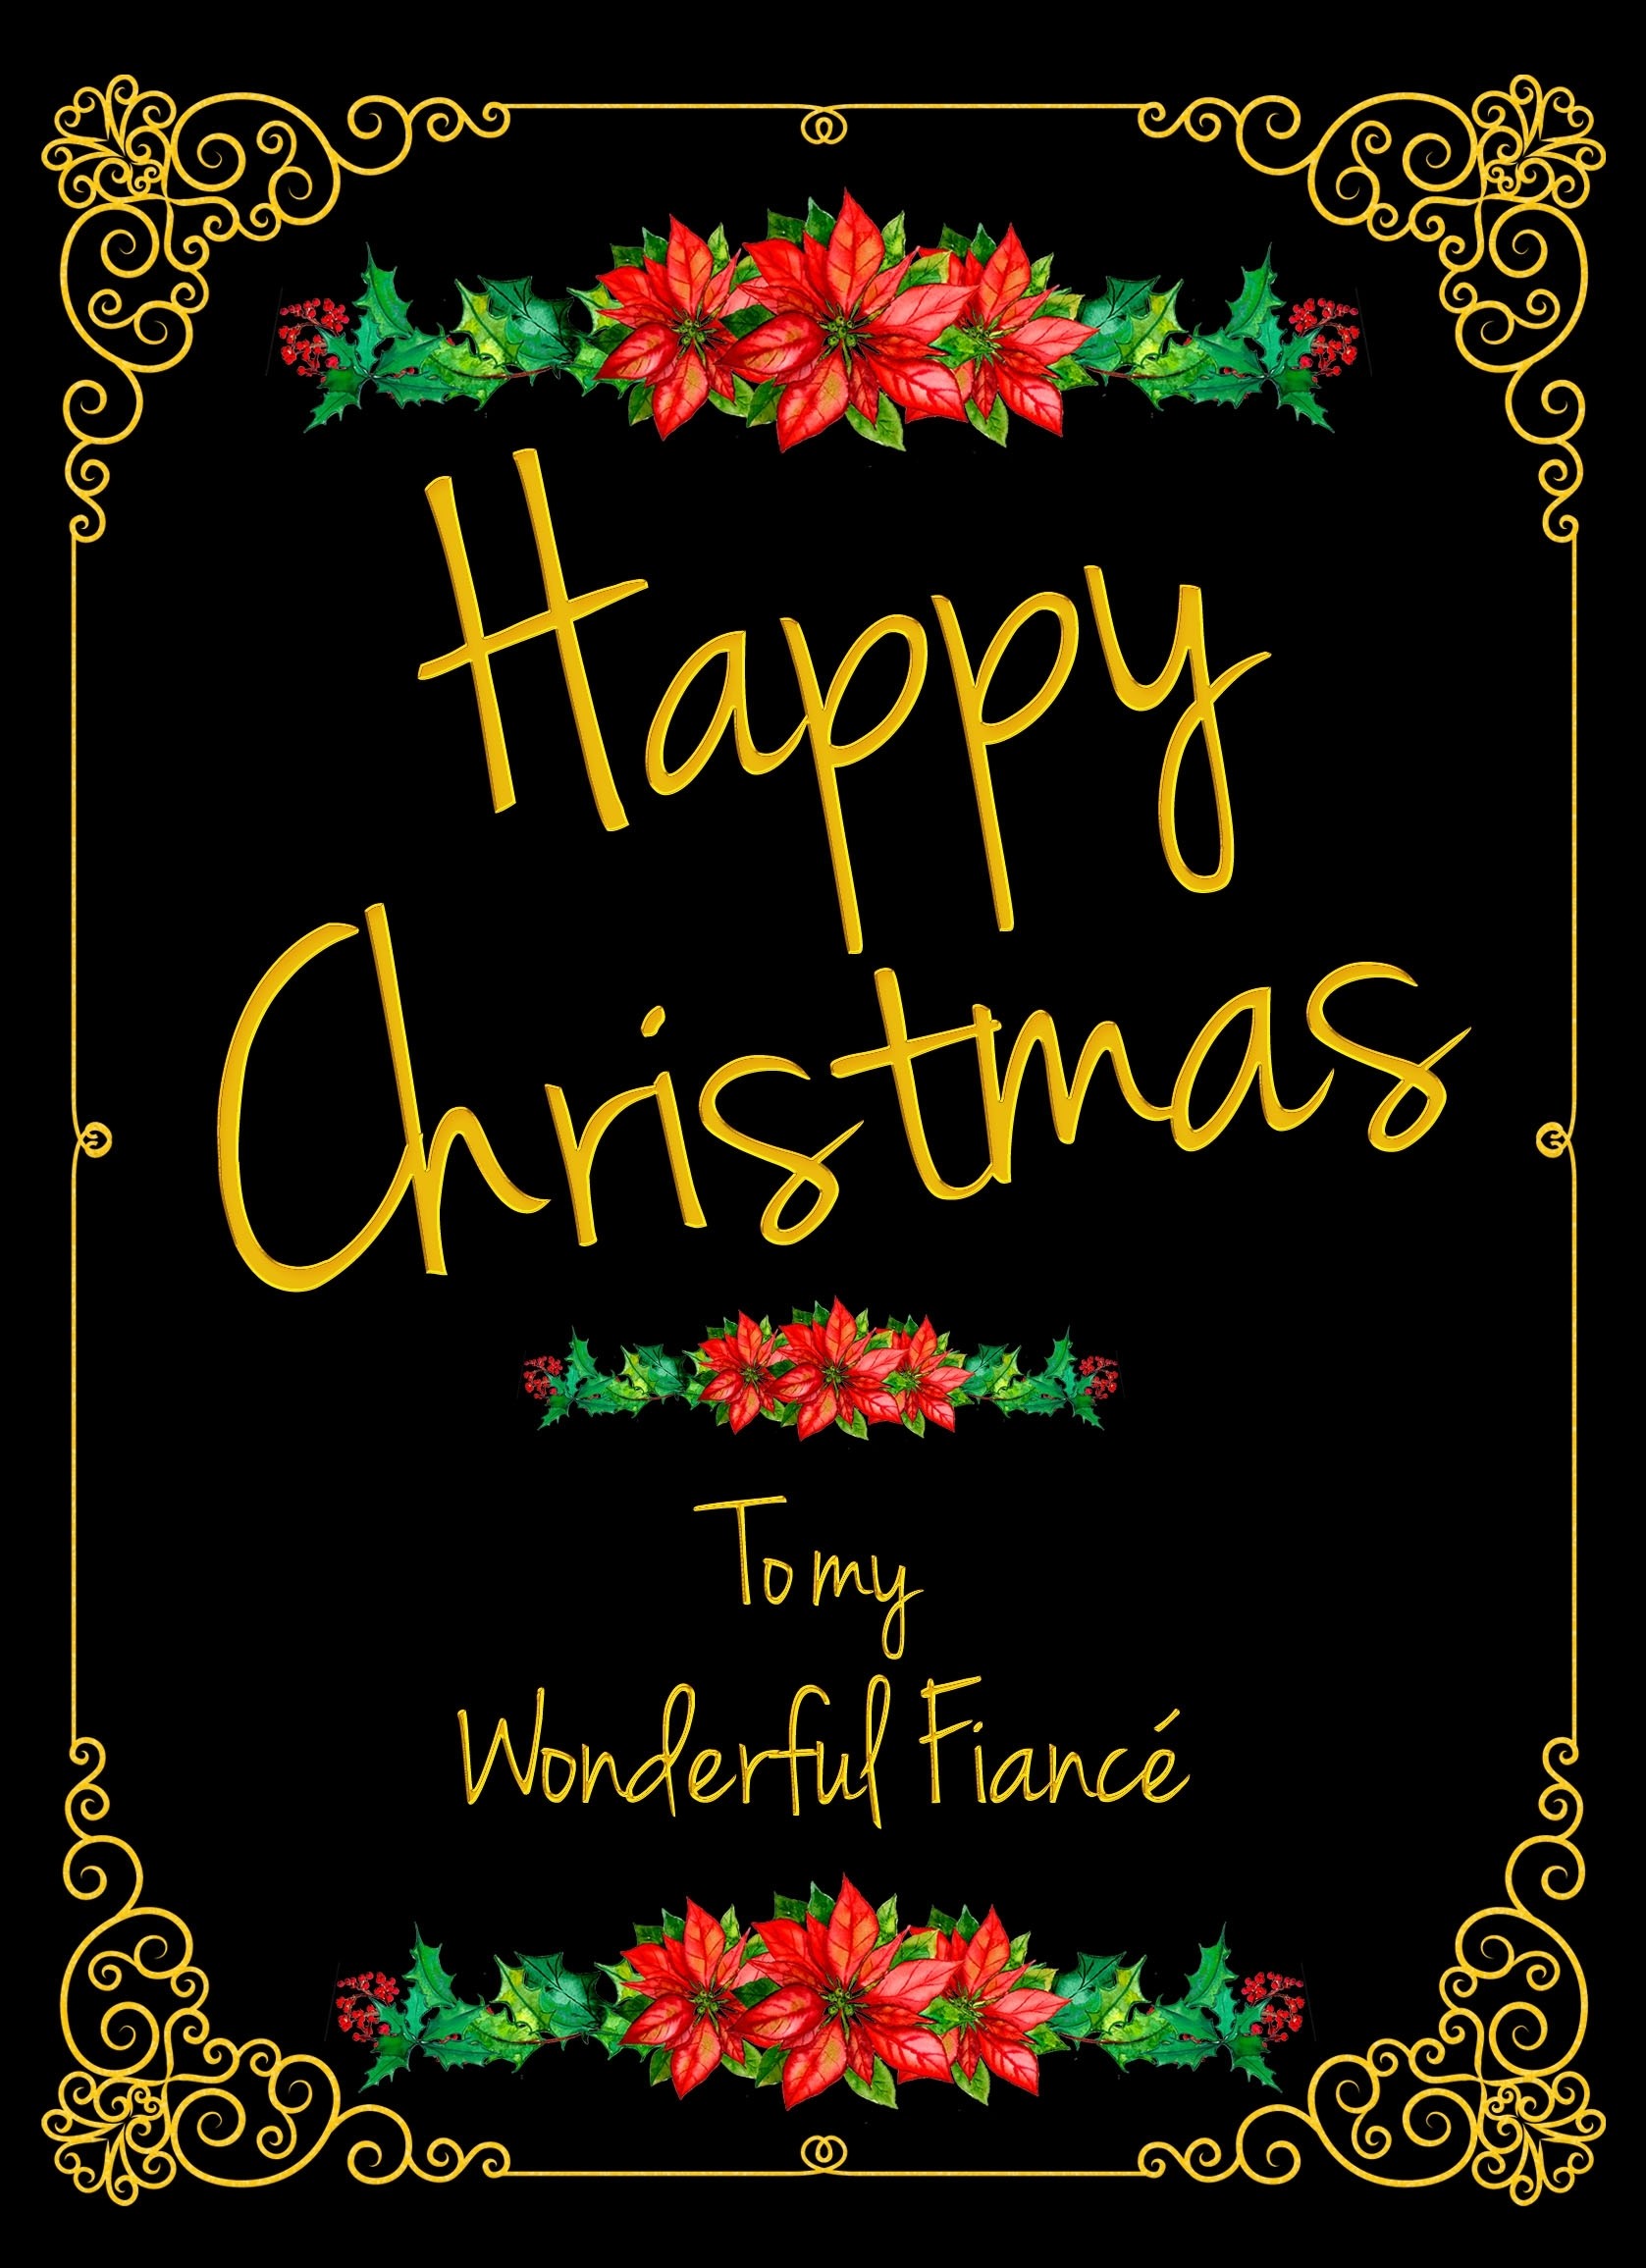 Christmas Card For Fiance (Wonderful)